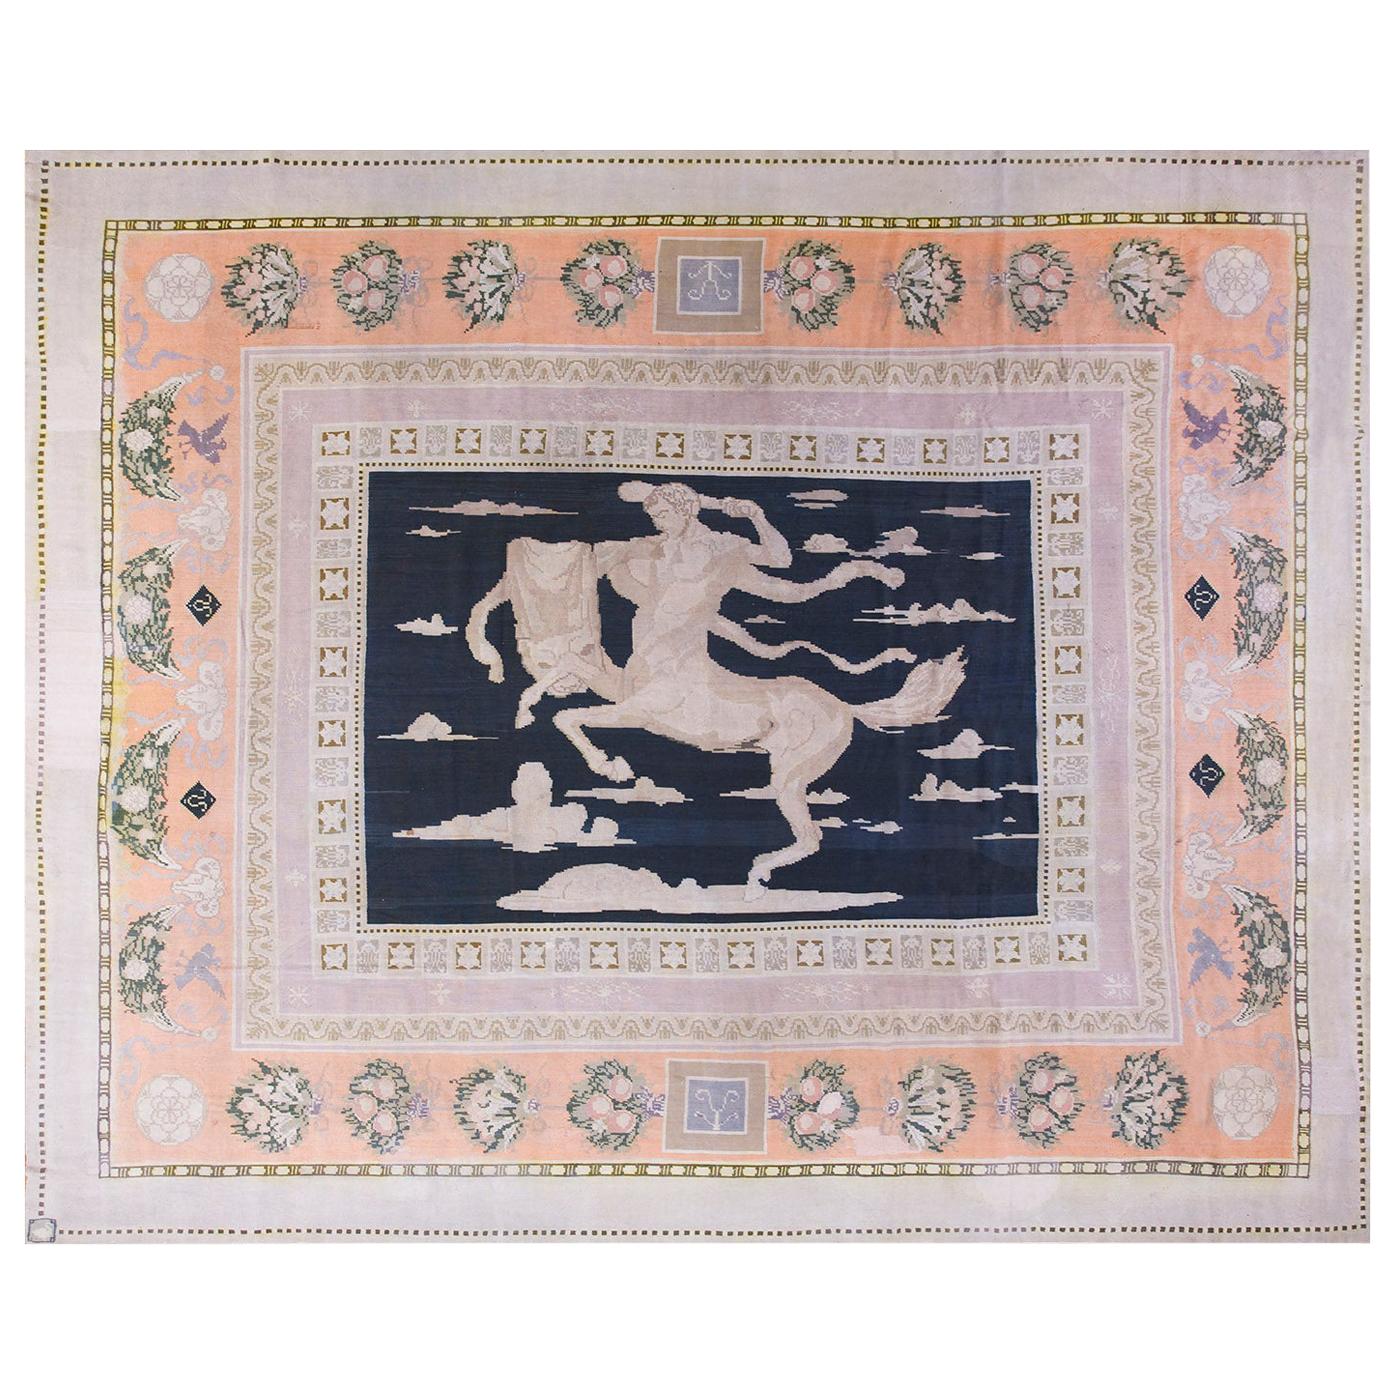 Late 19th Century Swedish Flat-Weave Carpet ( 11'6" x 14' - 350 x 425 cm )